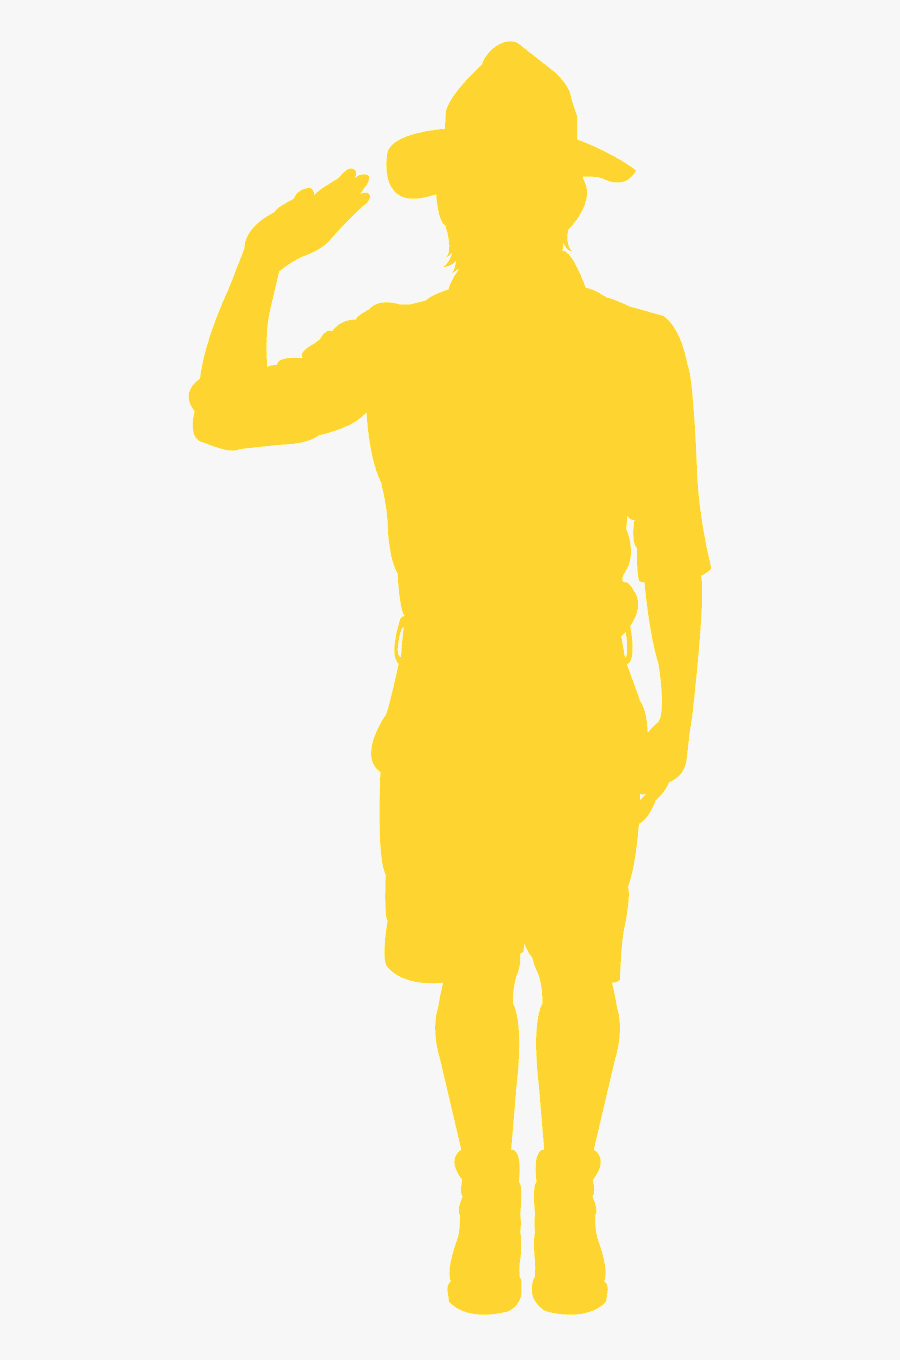 Silhouette Boy Scout Png, Transparent Clipart